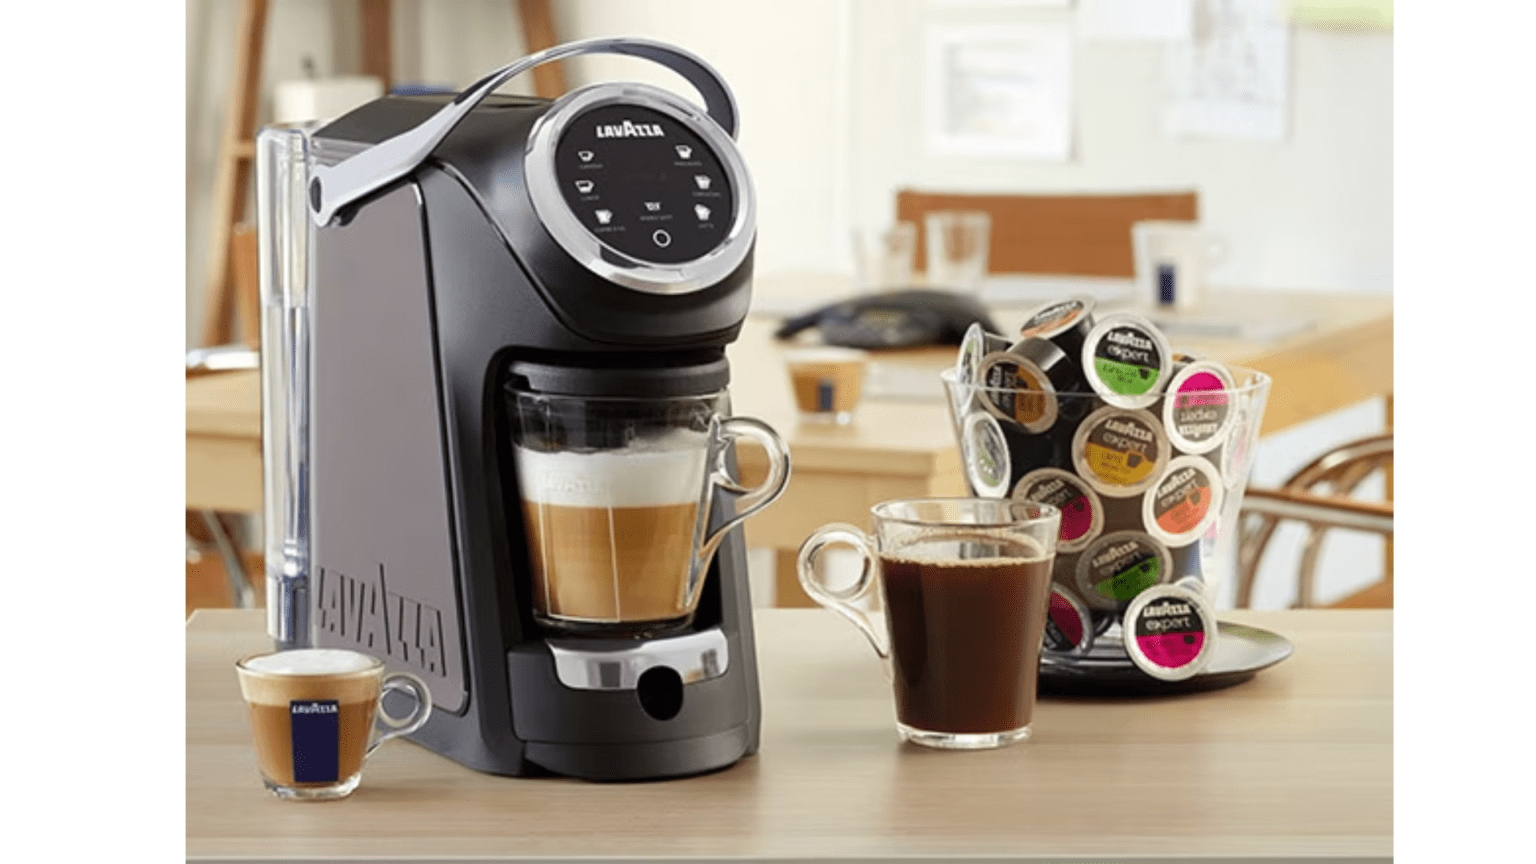 Lavazza Expert Coffee Classy Plus Single Serve ALL-IN-ONE Espresso & Coffee Brewer Machine